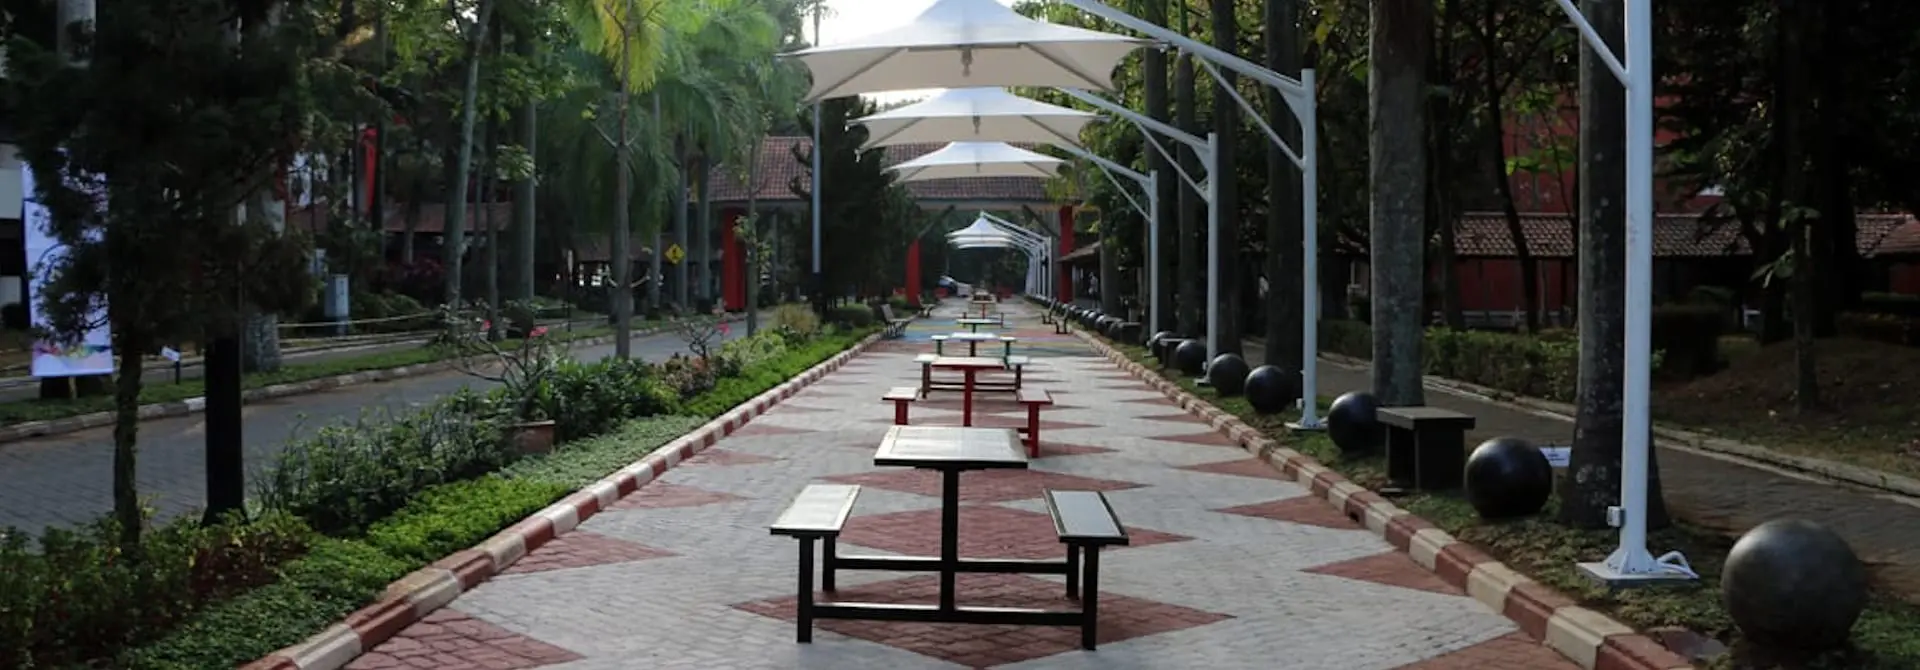 Upaya Green Campus Tel U Melalui Budidaya Tawon Klenceng